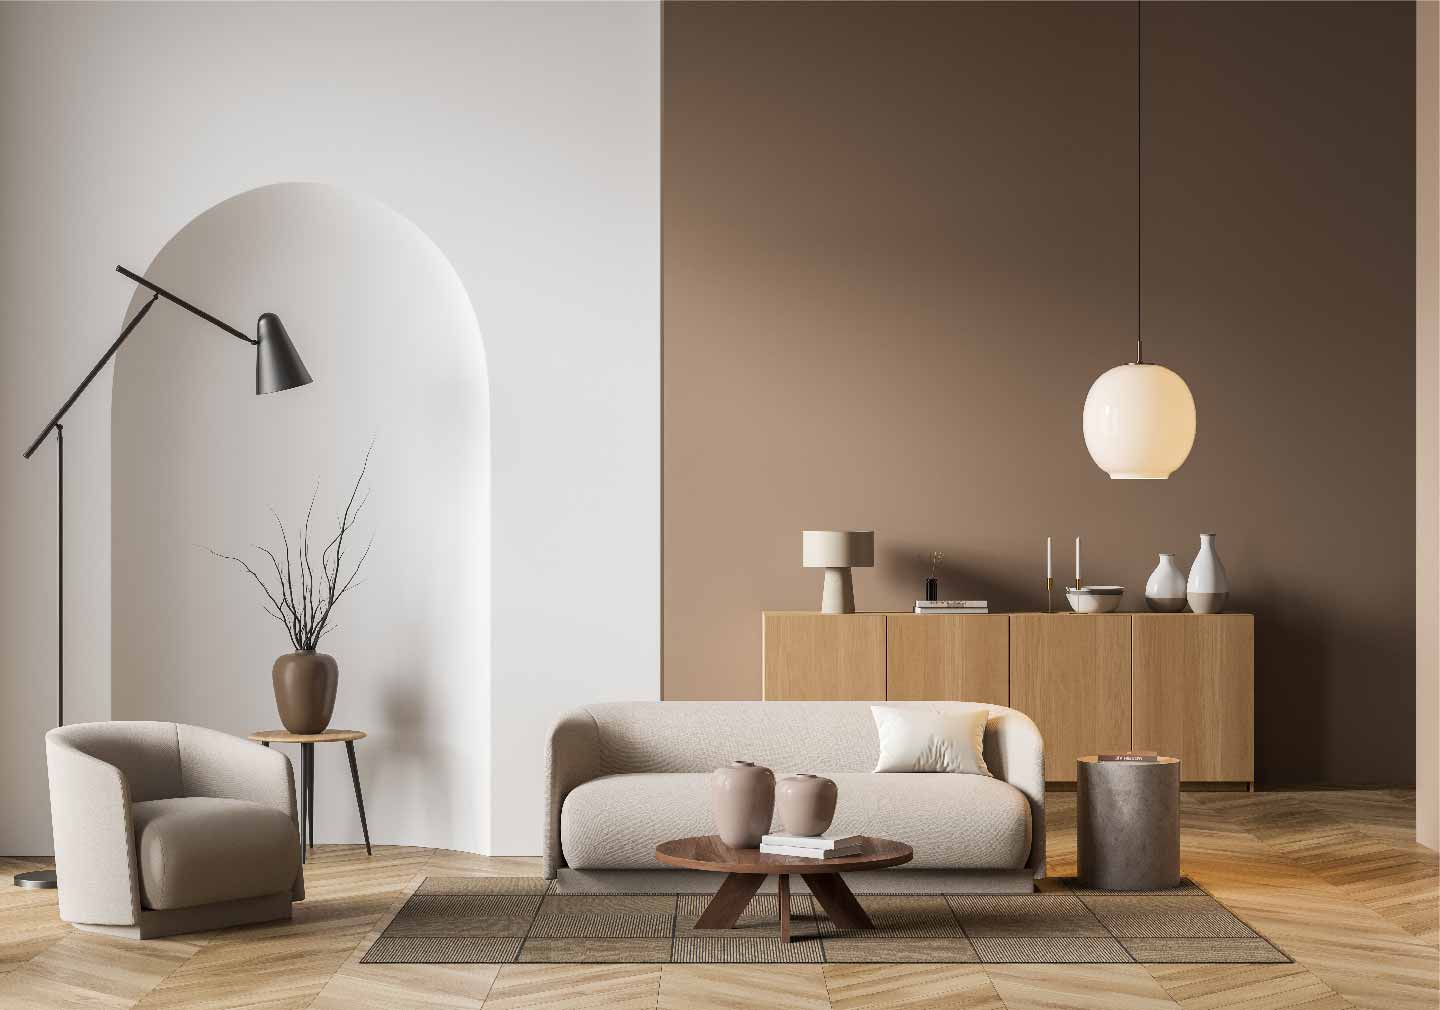 A living room sofa to elevate your interior designs moods